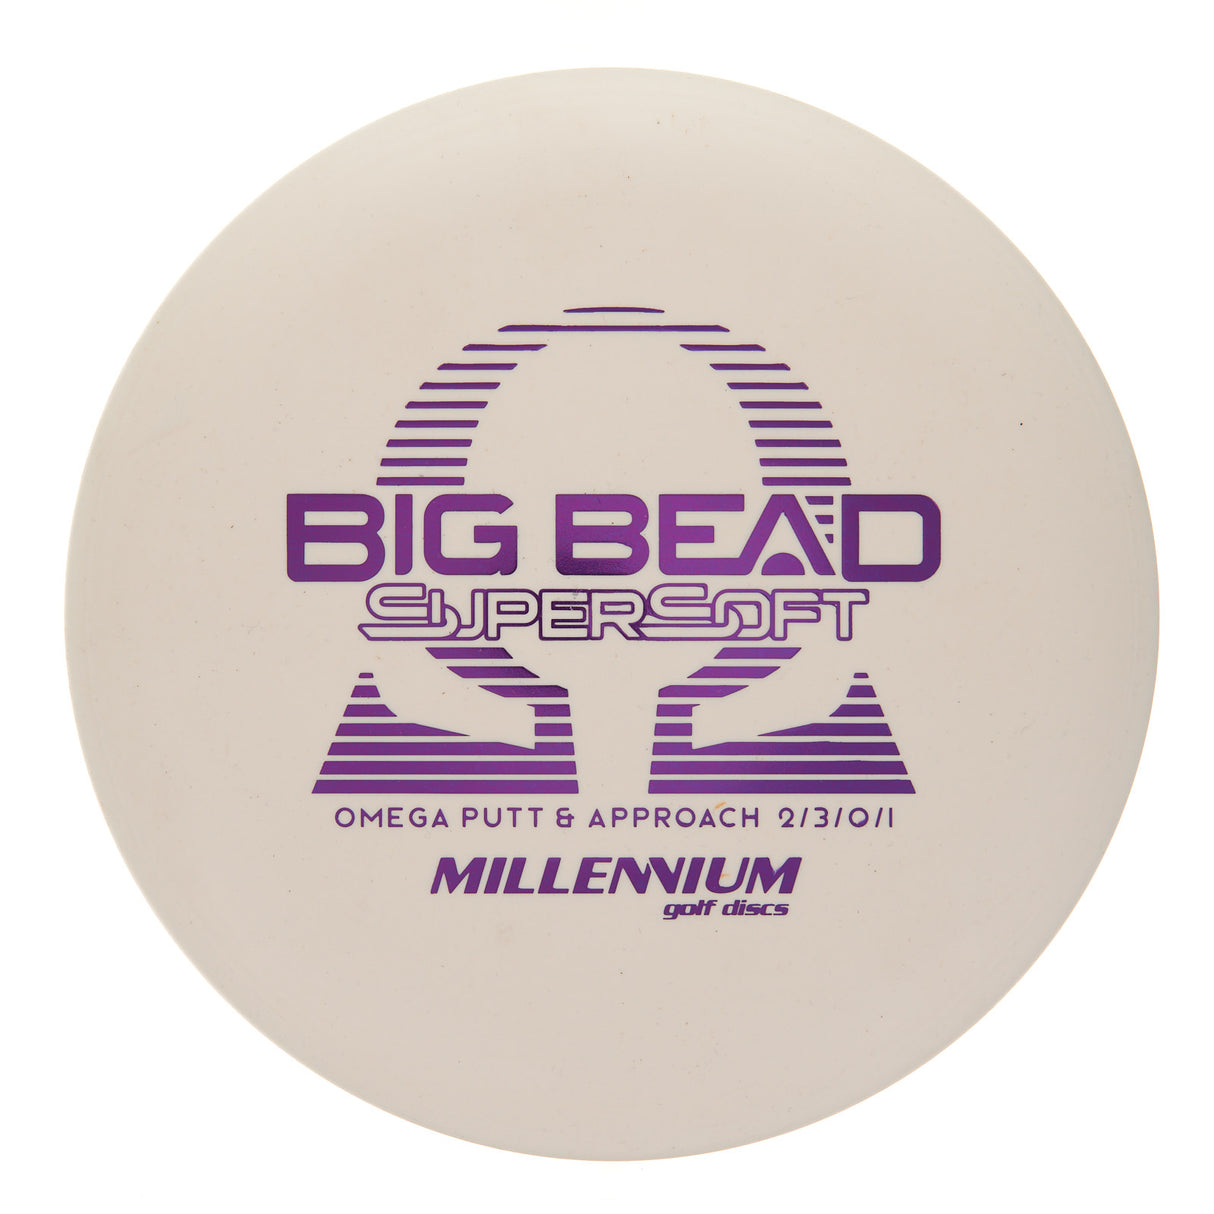 Millennium Omega Big Bead - SuperSoft 166g | Style 0001